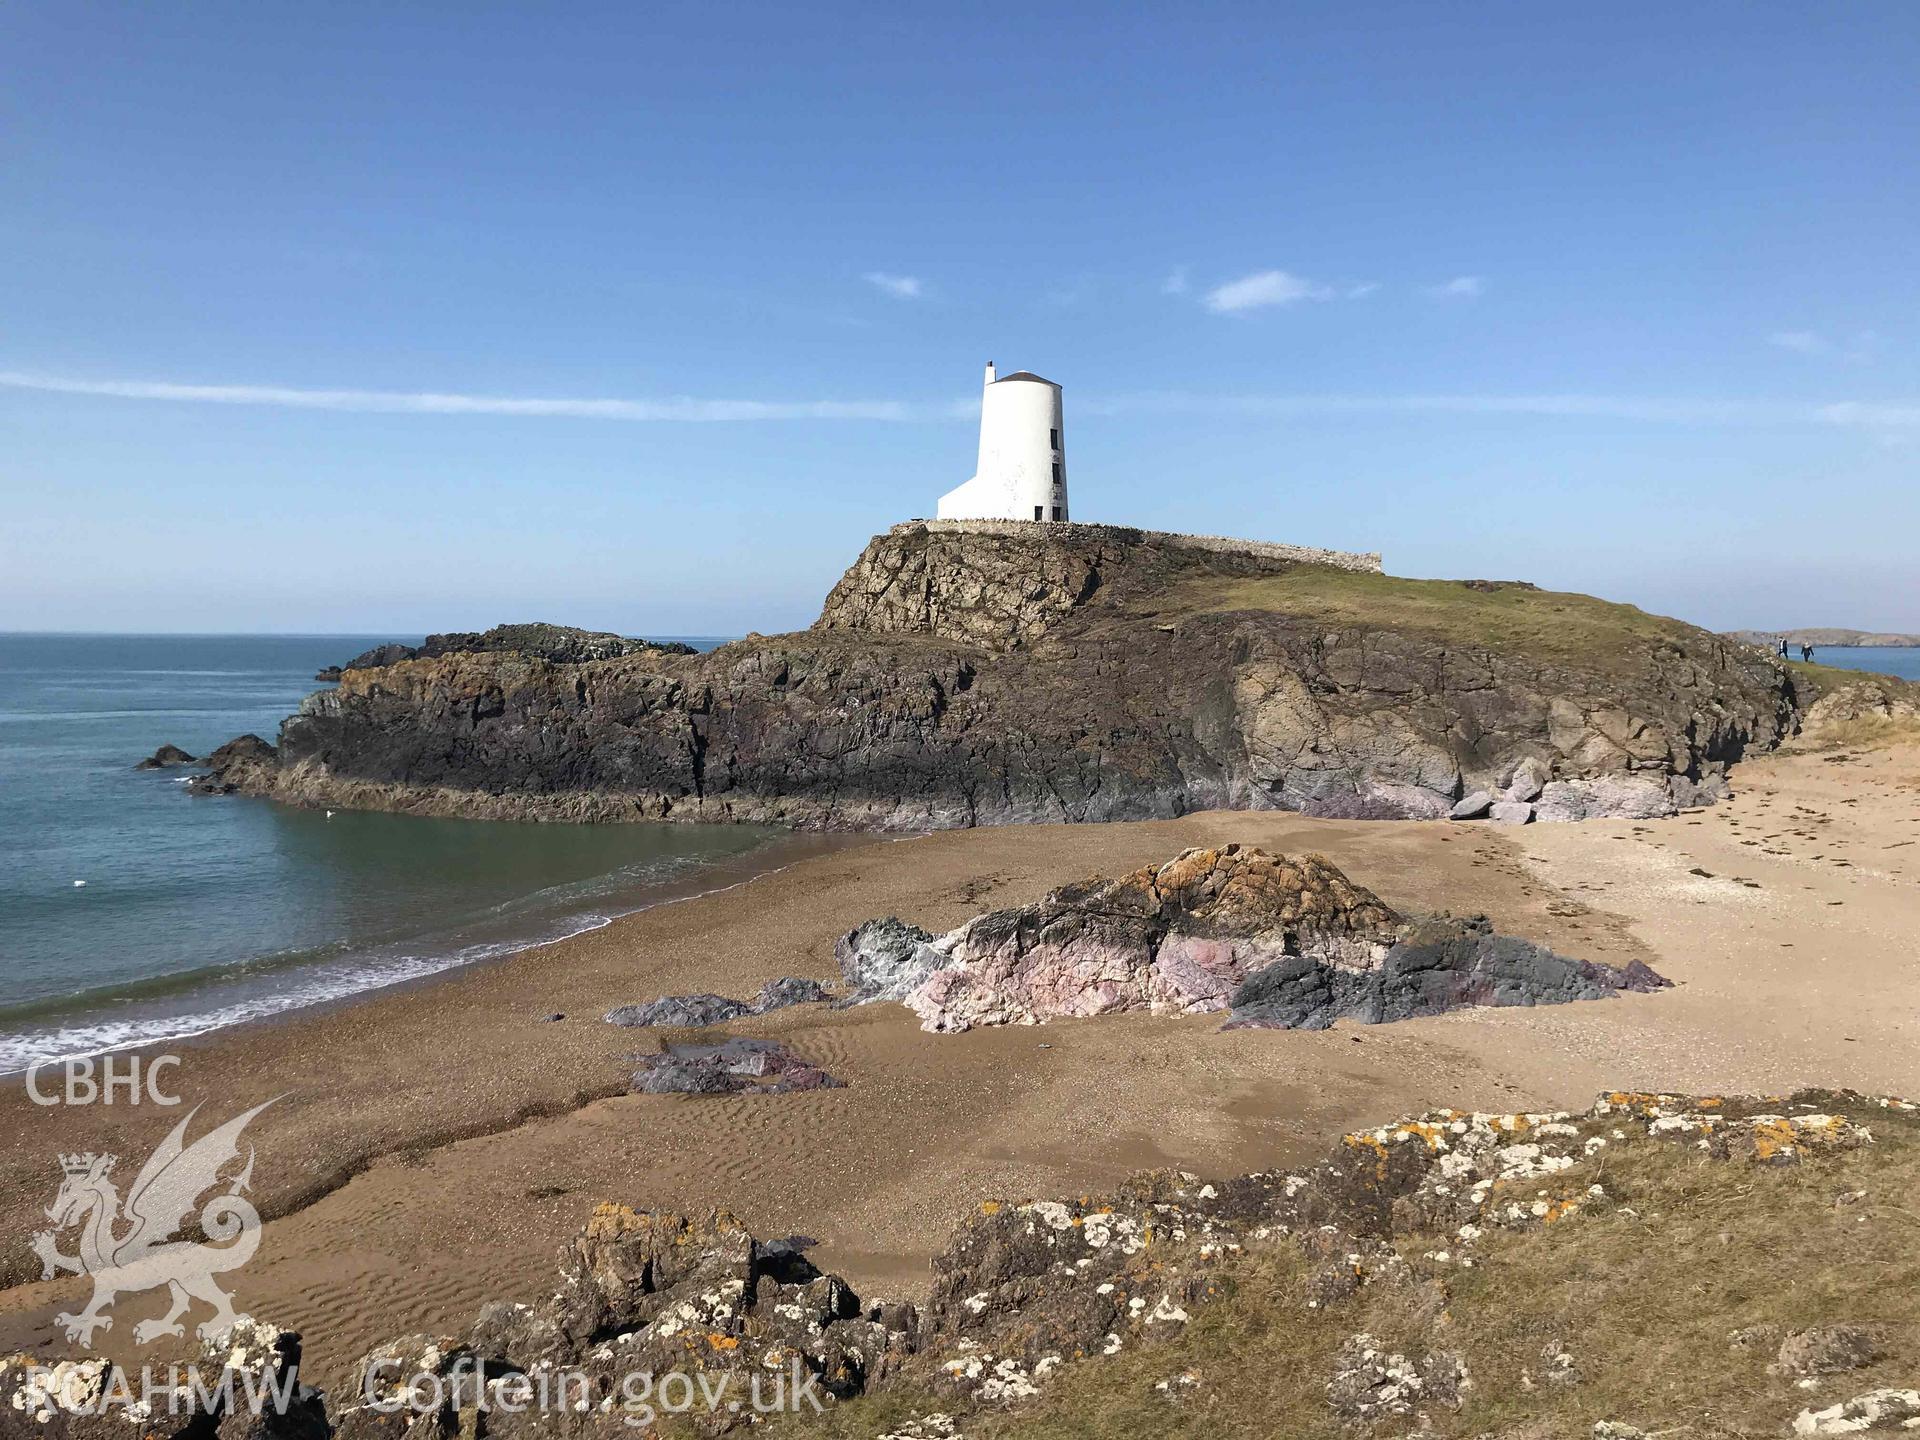 Digital photograph of Llanddwyn island lighthouse. Produced by Paul Davis in 2020